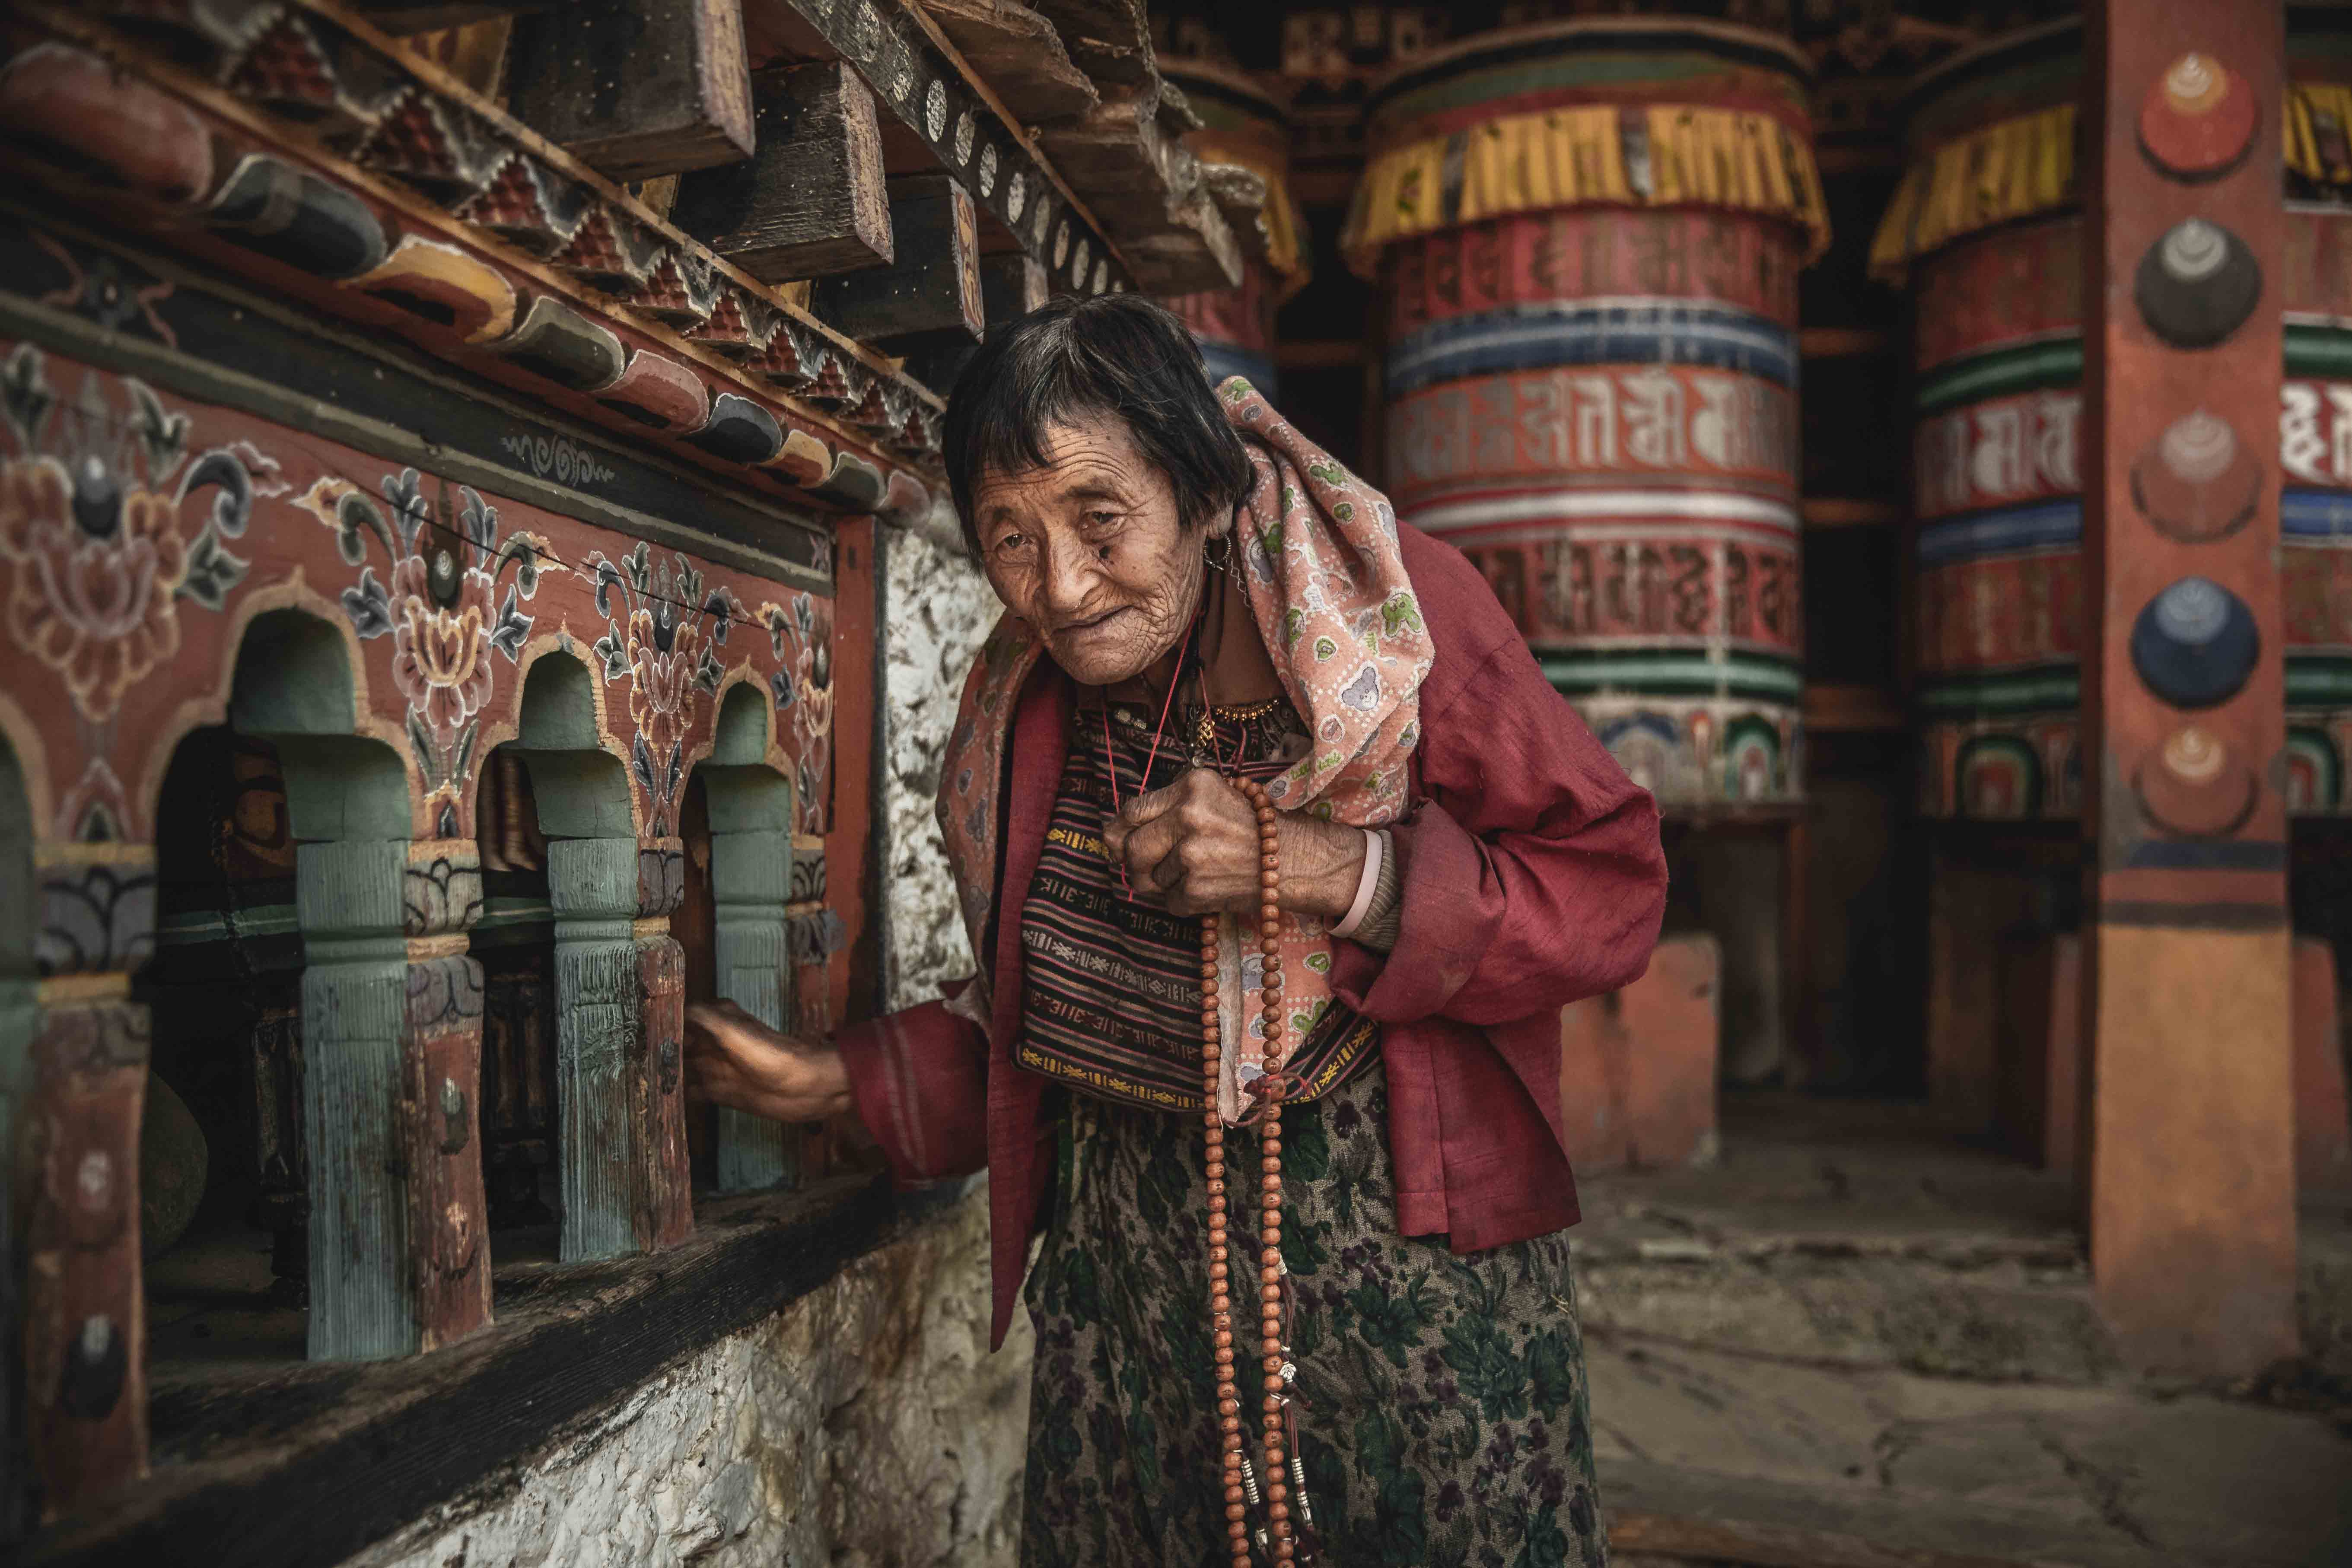 Portrait photography of an elderly Bhutanese woman at a temple near Bumthang, Bhutan. She is spinning a prayer wheel